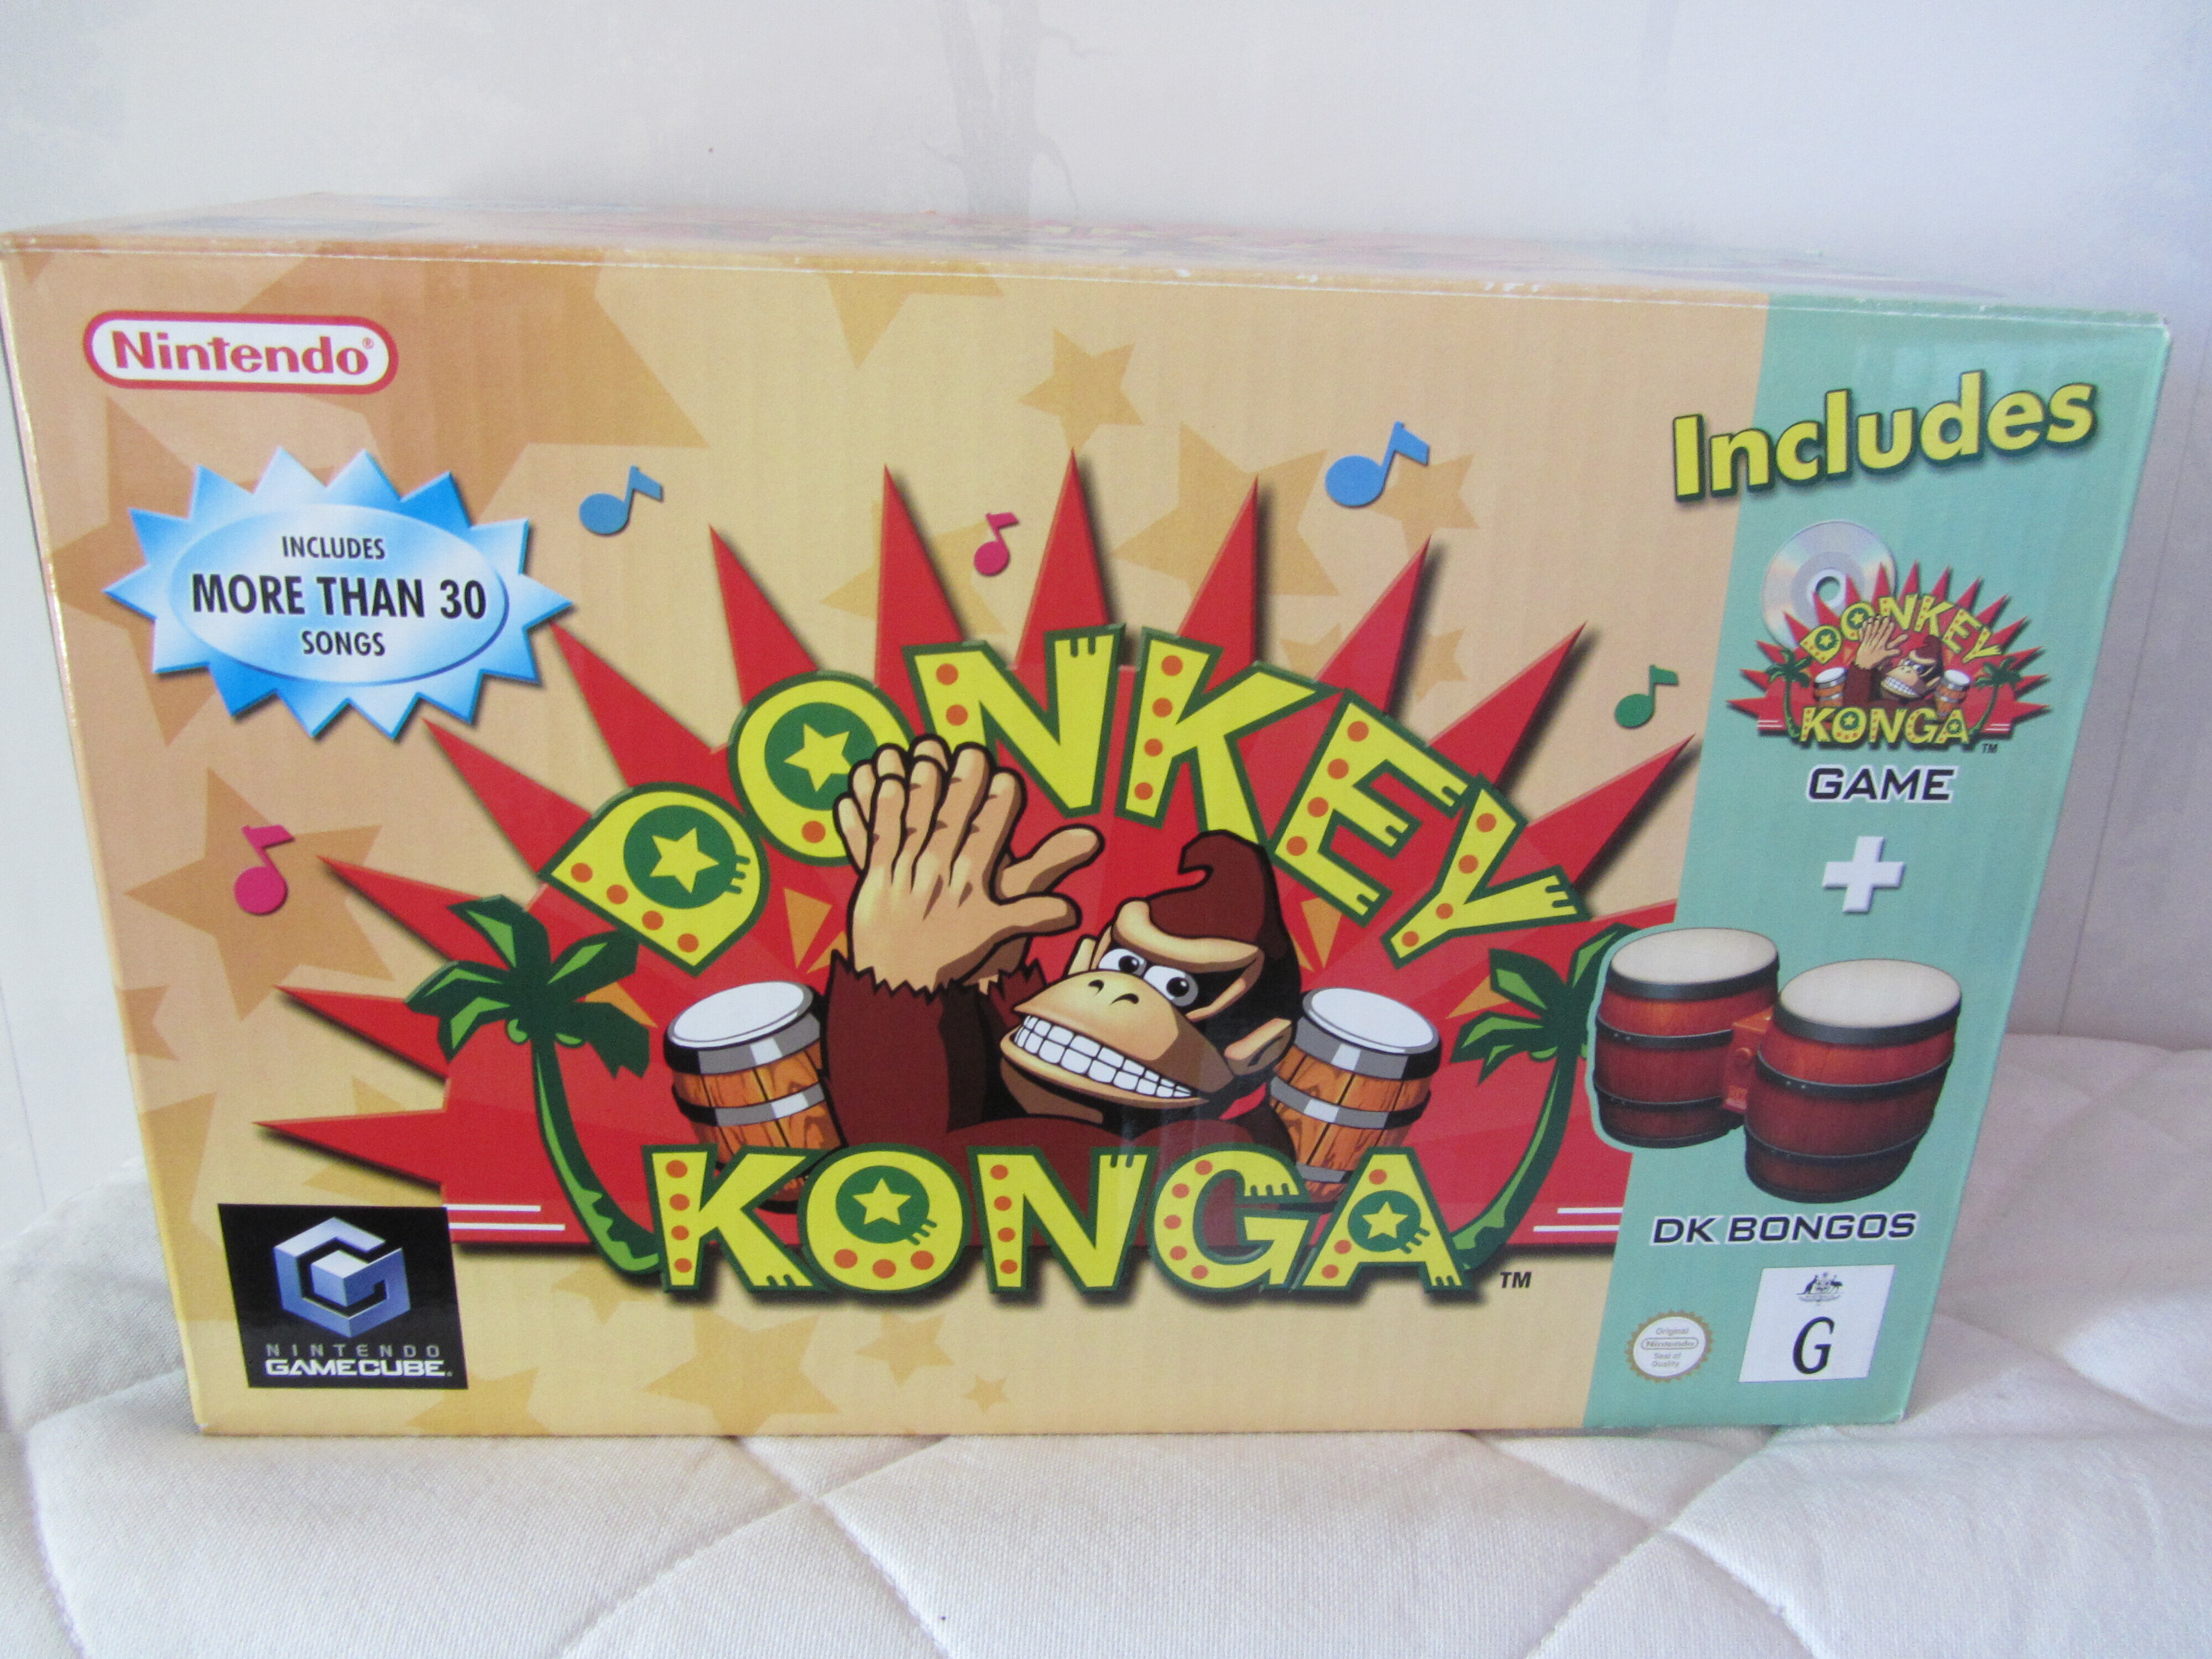  Nintendo GameCube Donkey Kong Bongos [AUS]